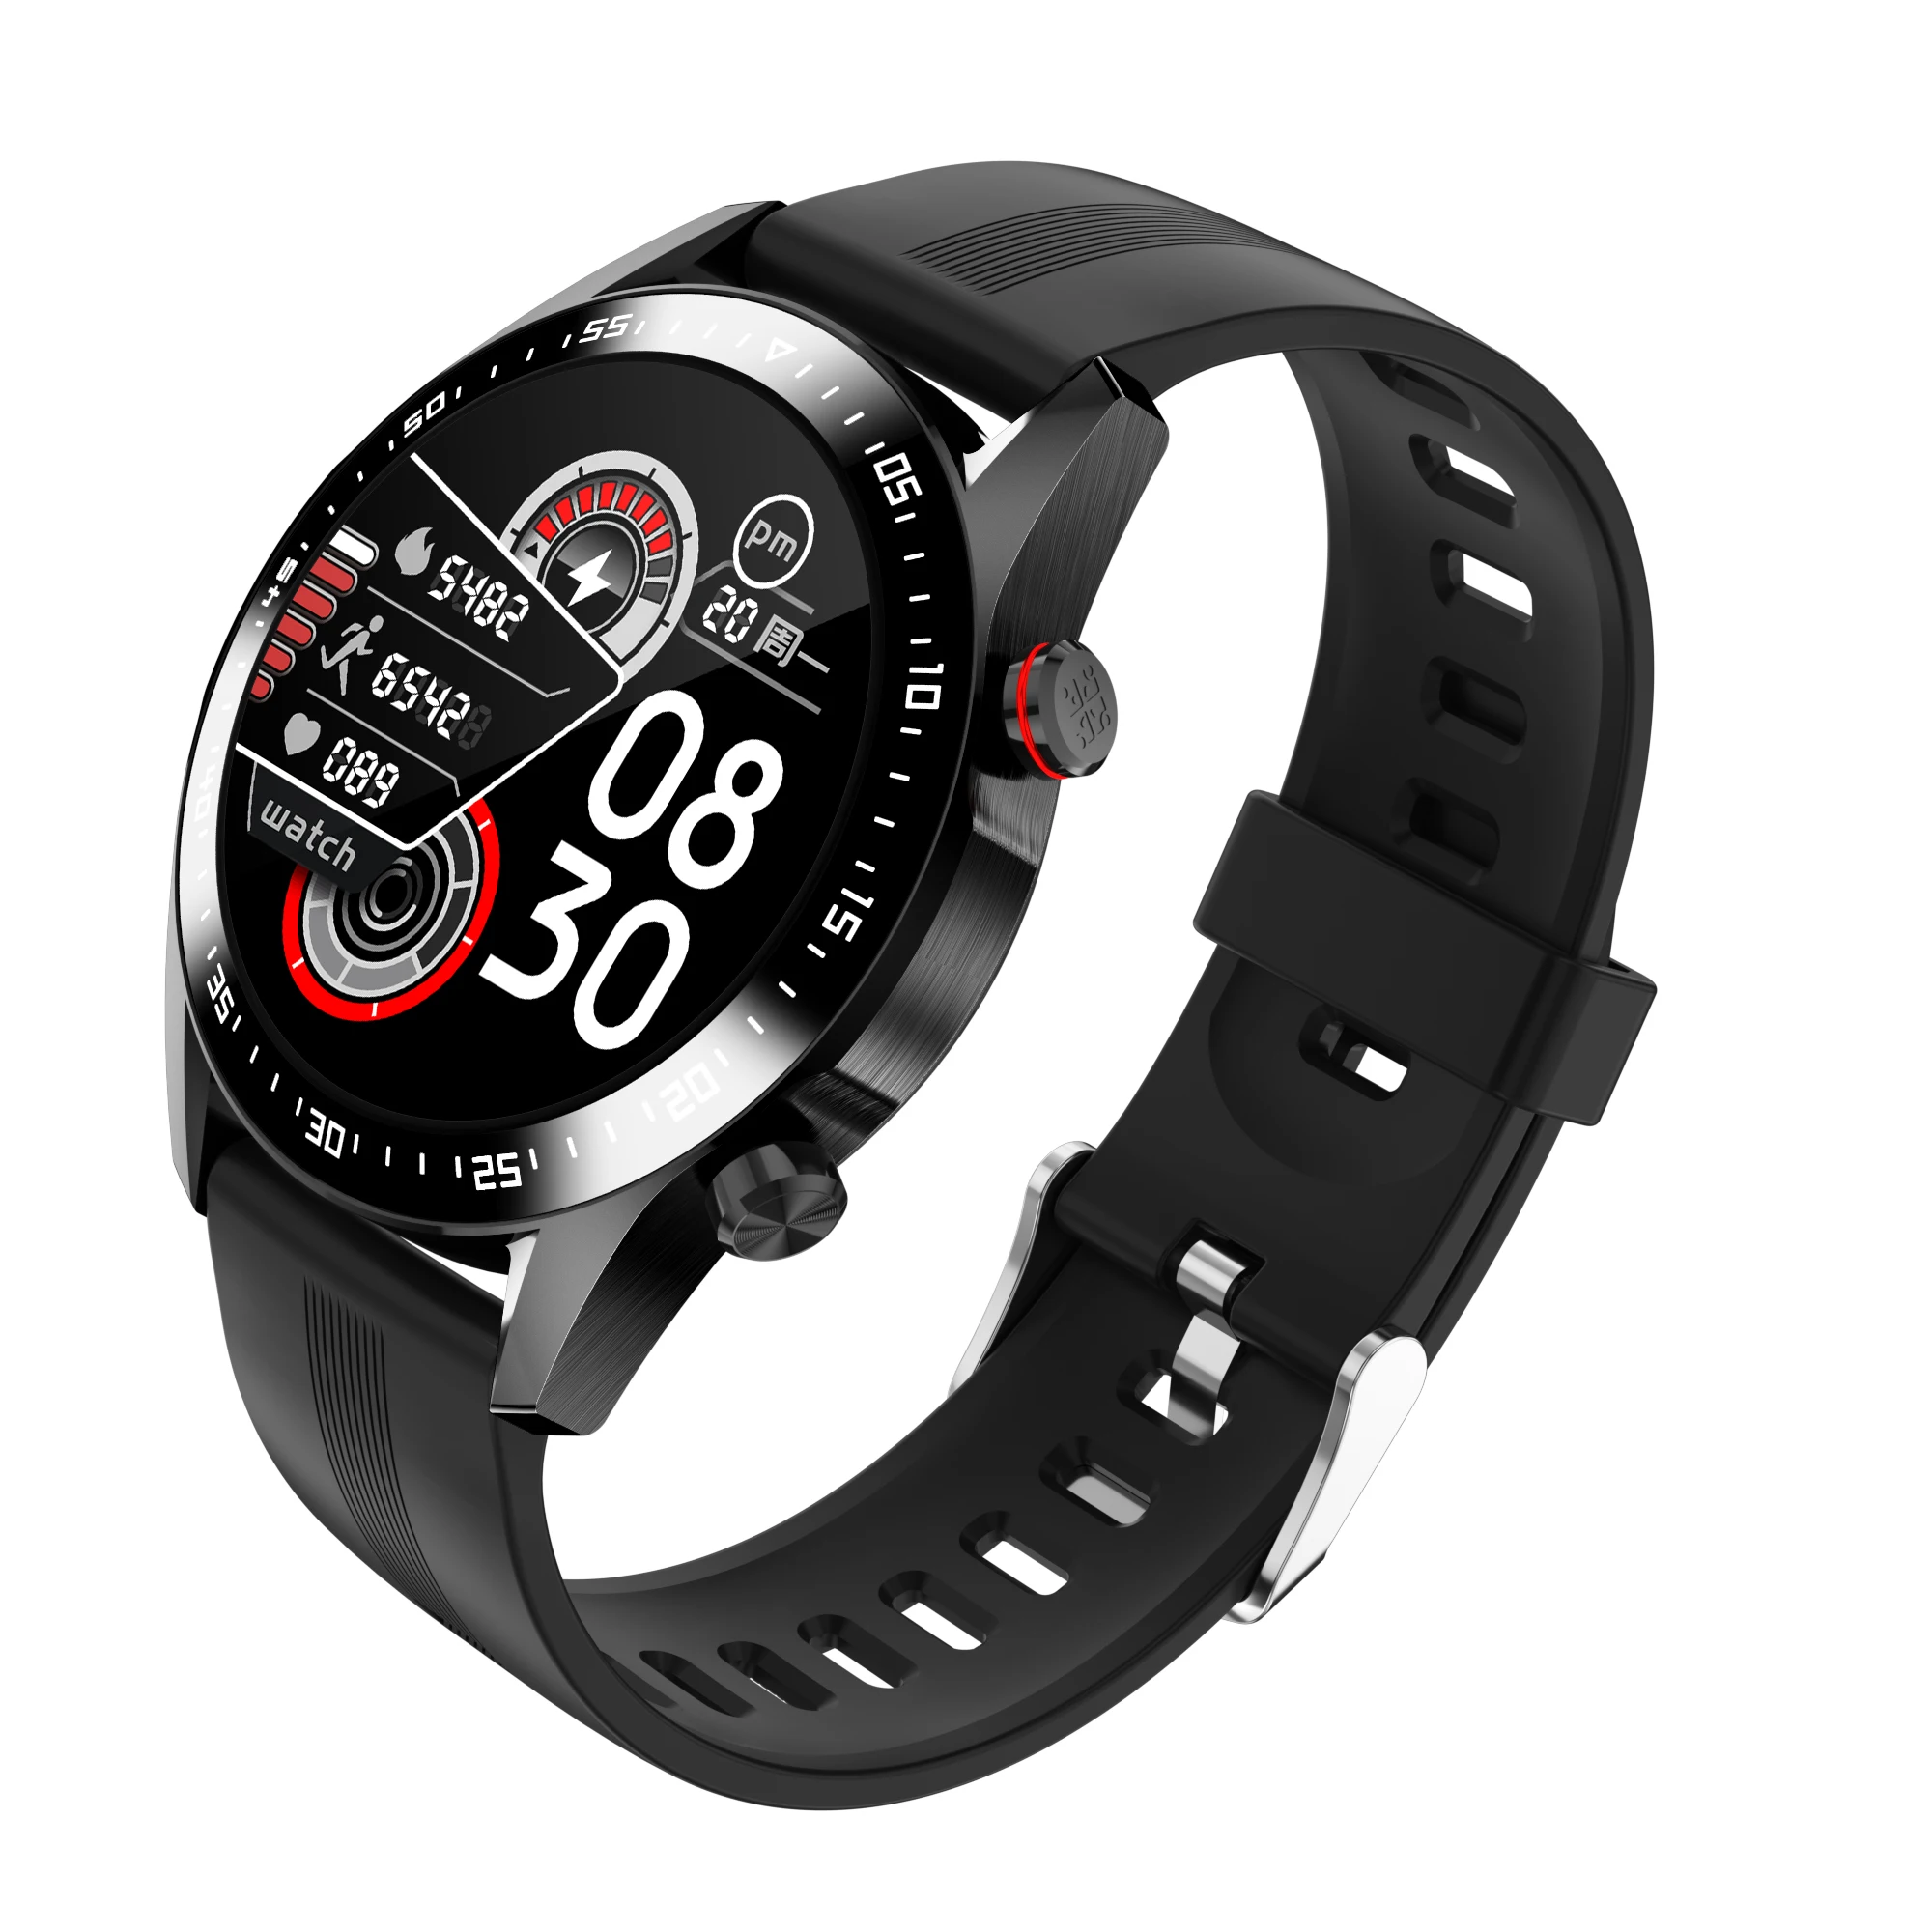 

Sport Smart Watch Impermeabile Smart Watch E12 Braccialetto Orologio Miglior Android E Ios Smart Watch Fitness Tracker